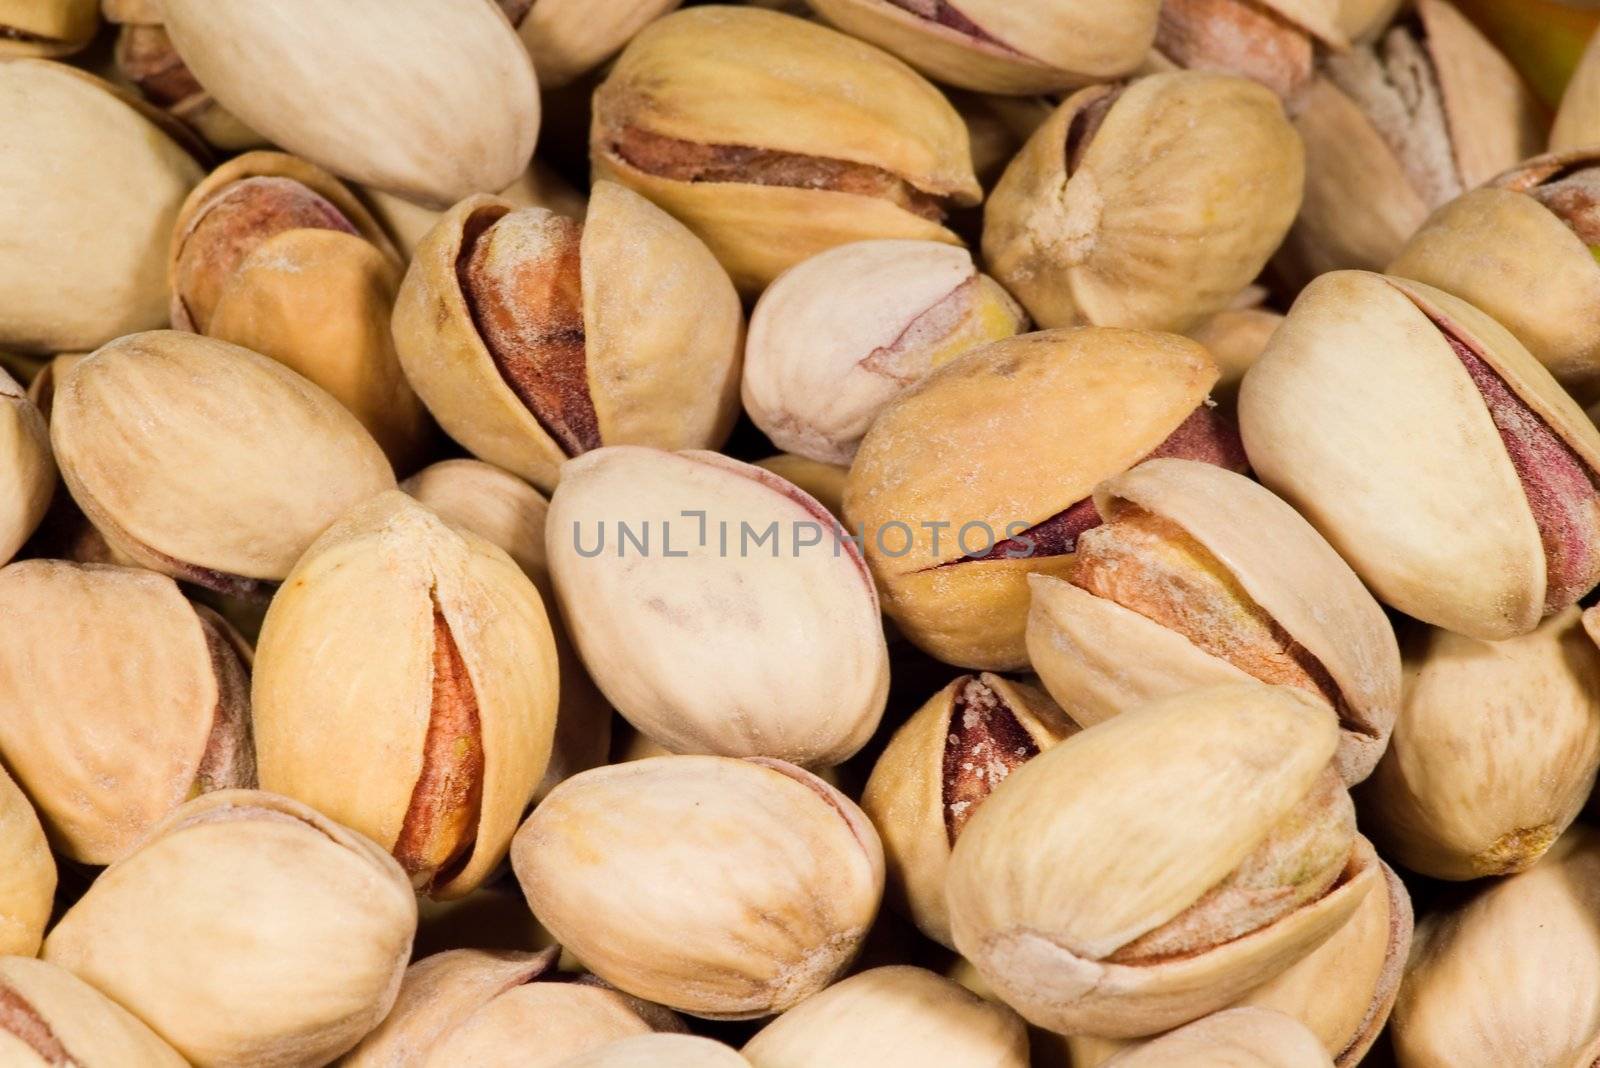 meny nuts by macro lens.